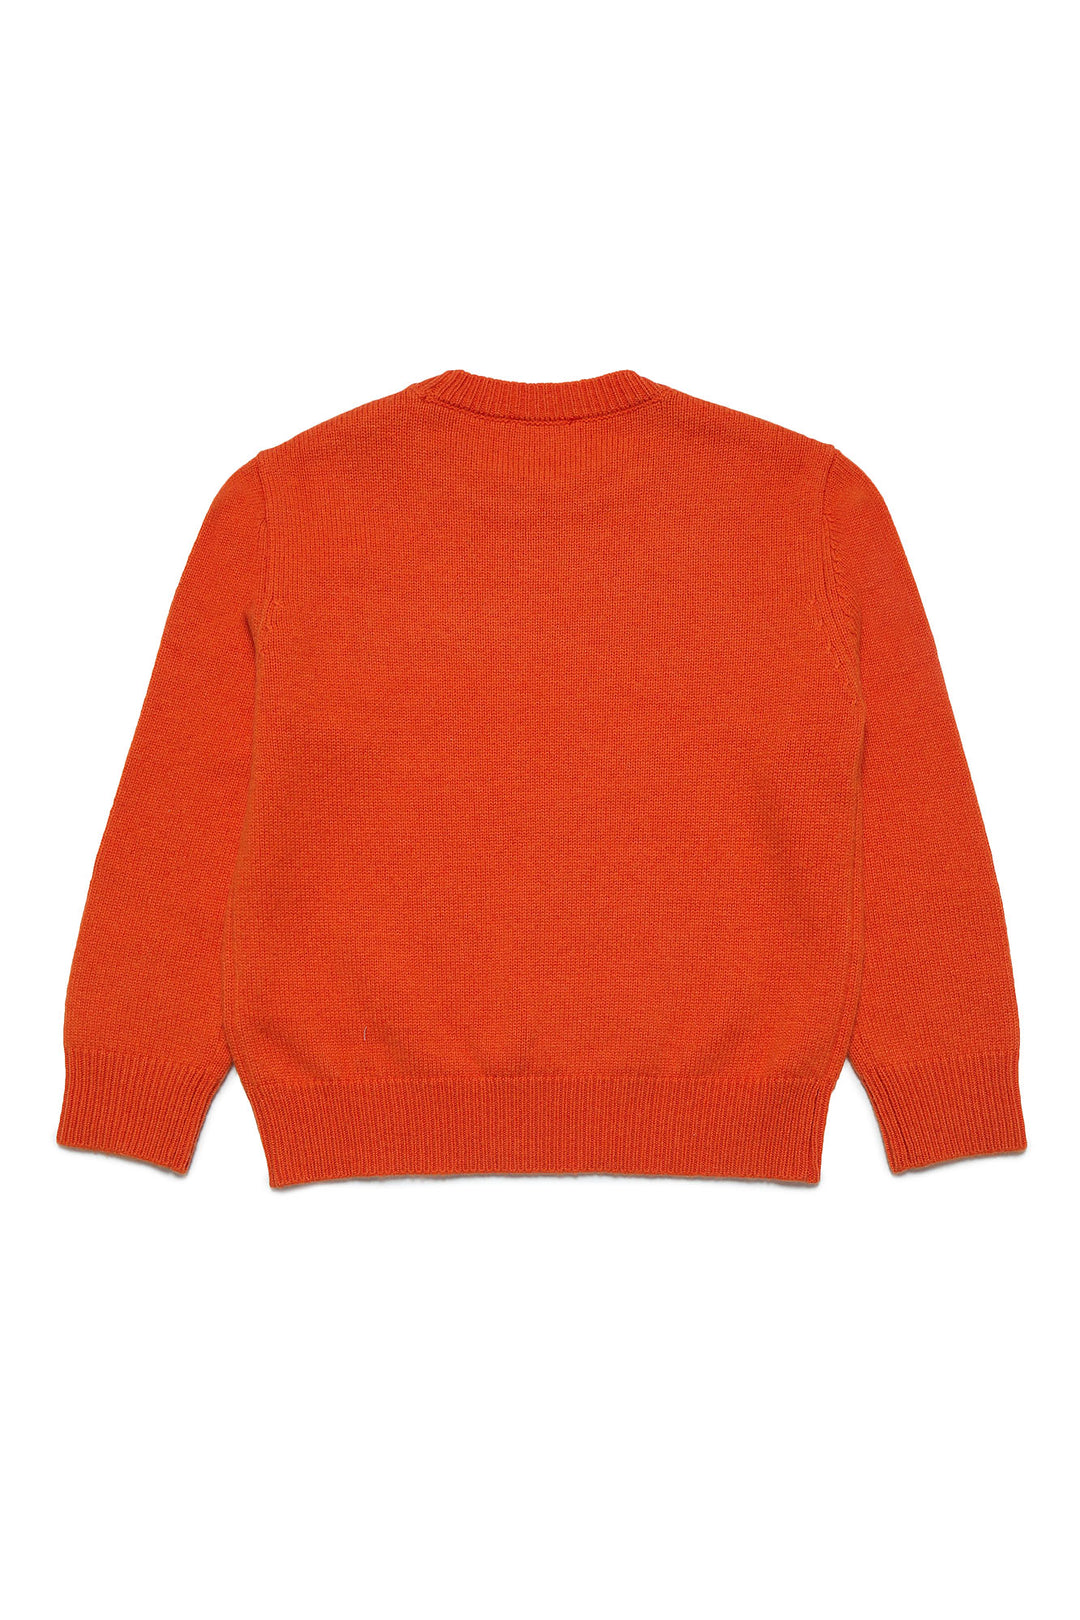 Chemise orange avec logo brodé